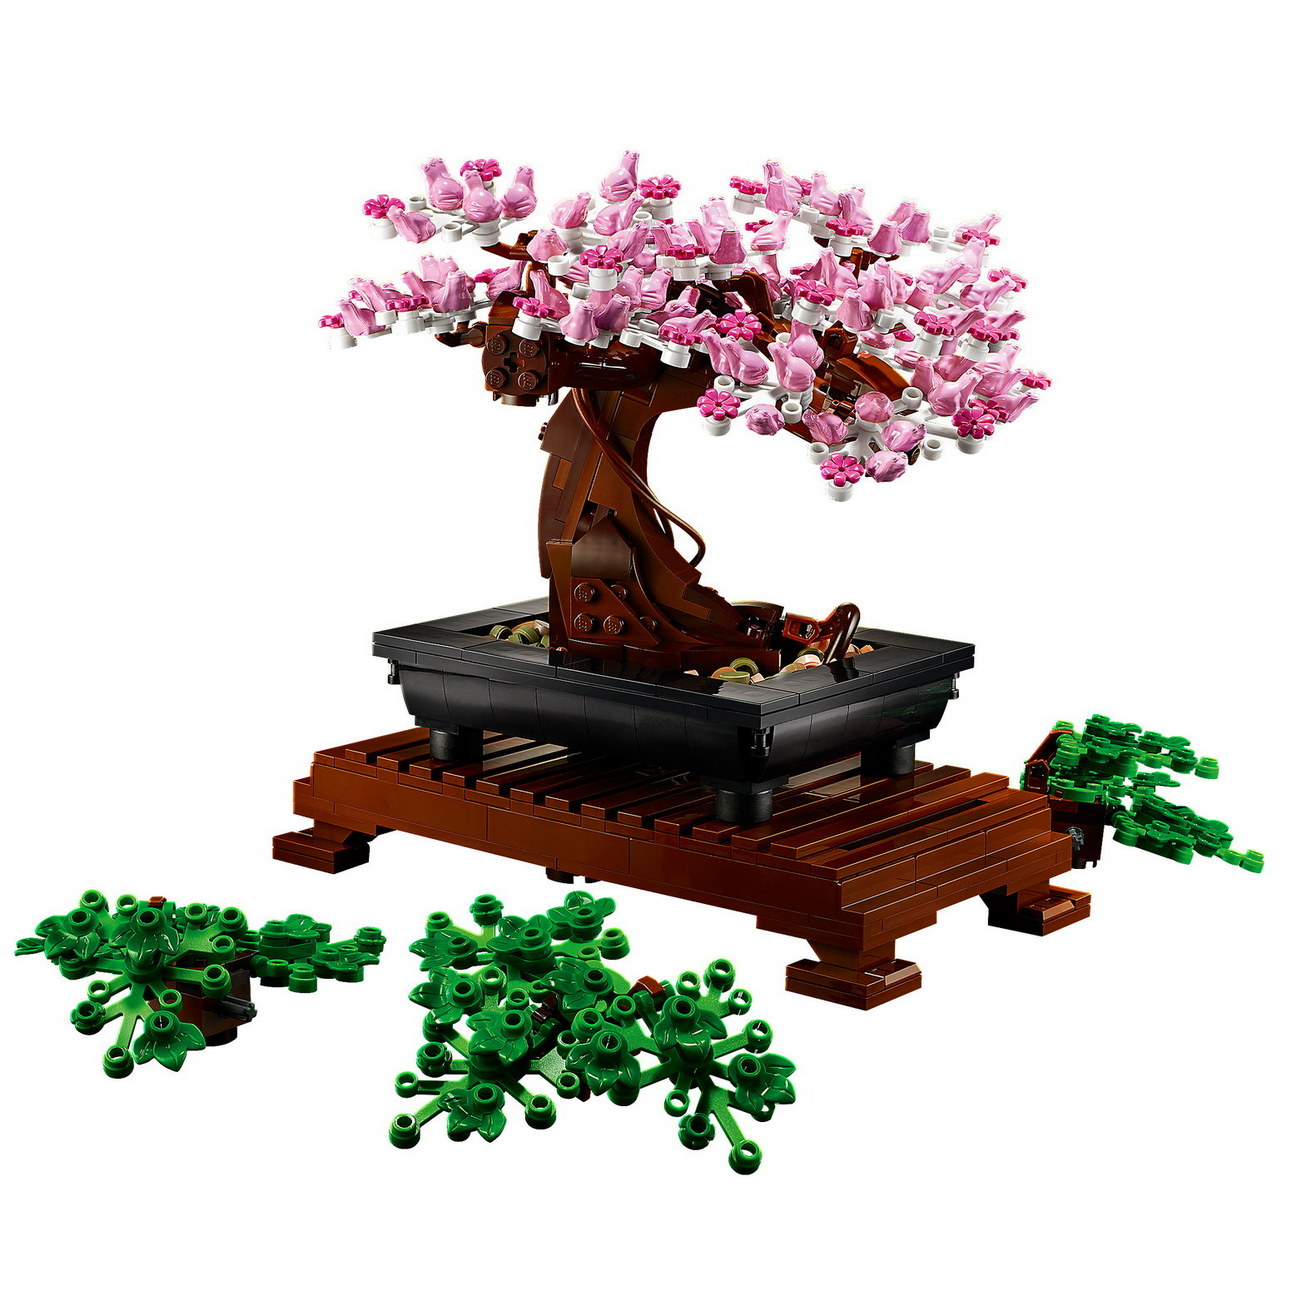 LEGO Creator Expert 10281 - Bonsai Baum